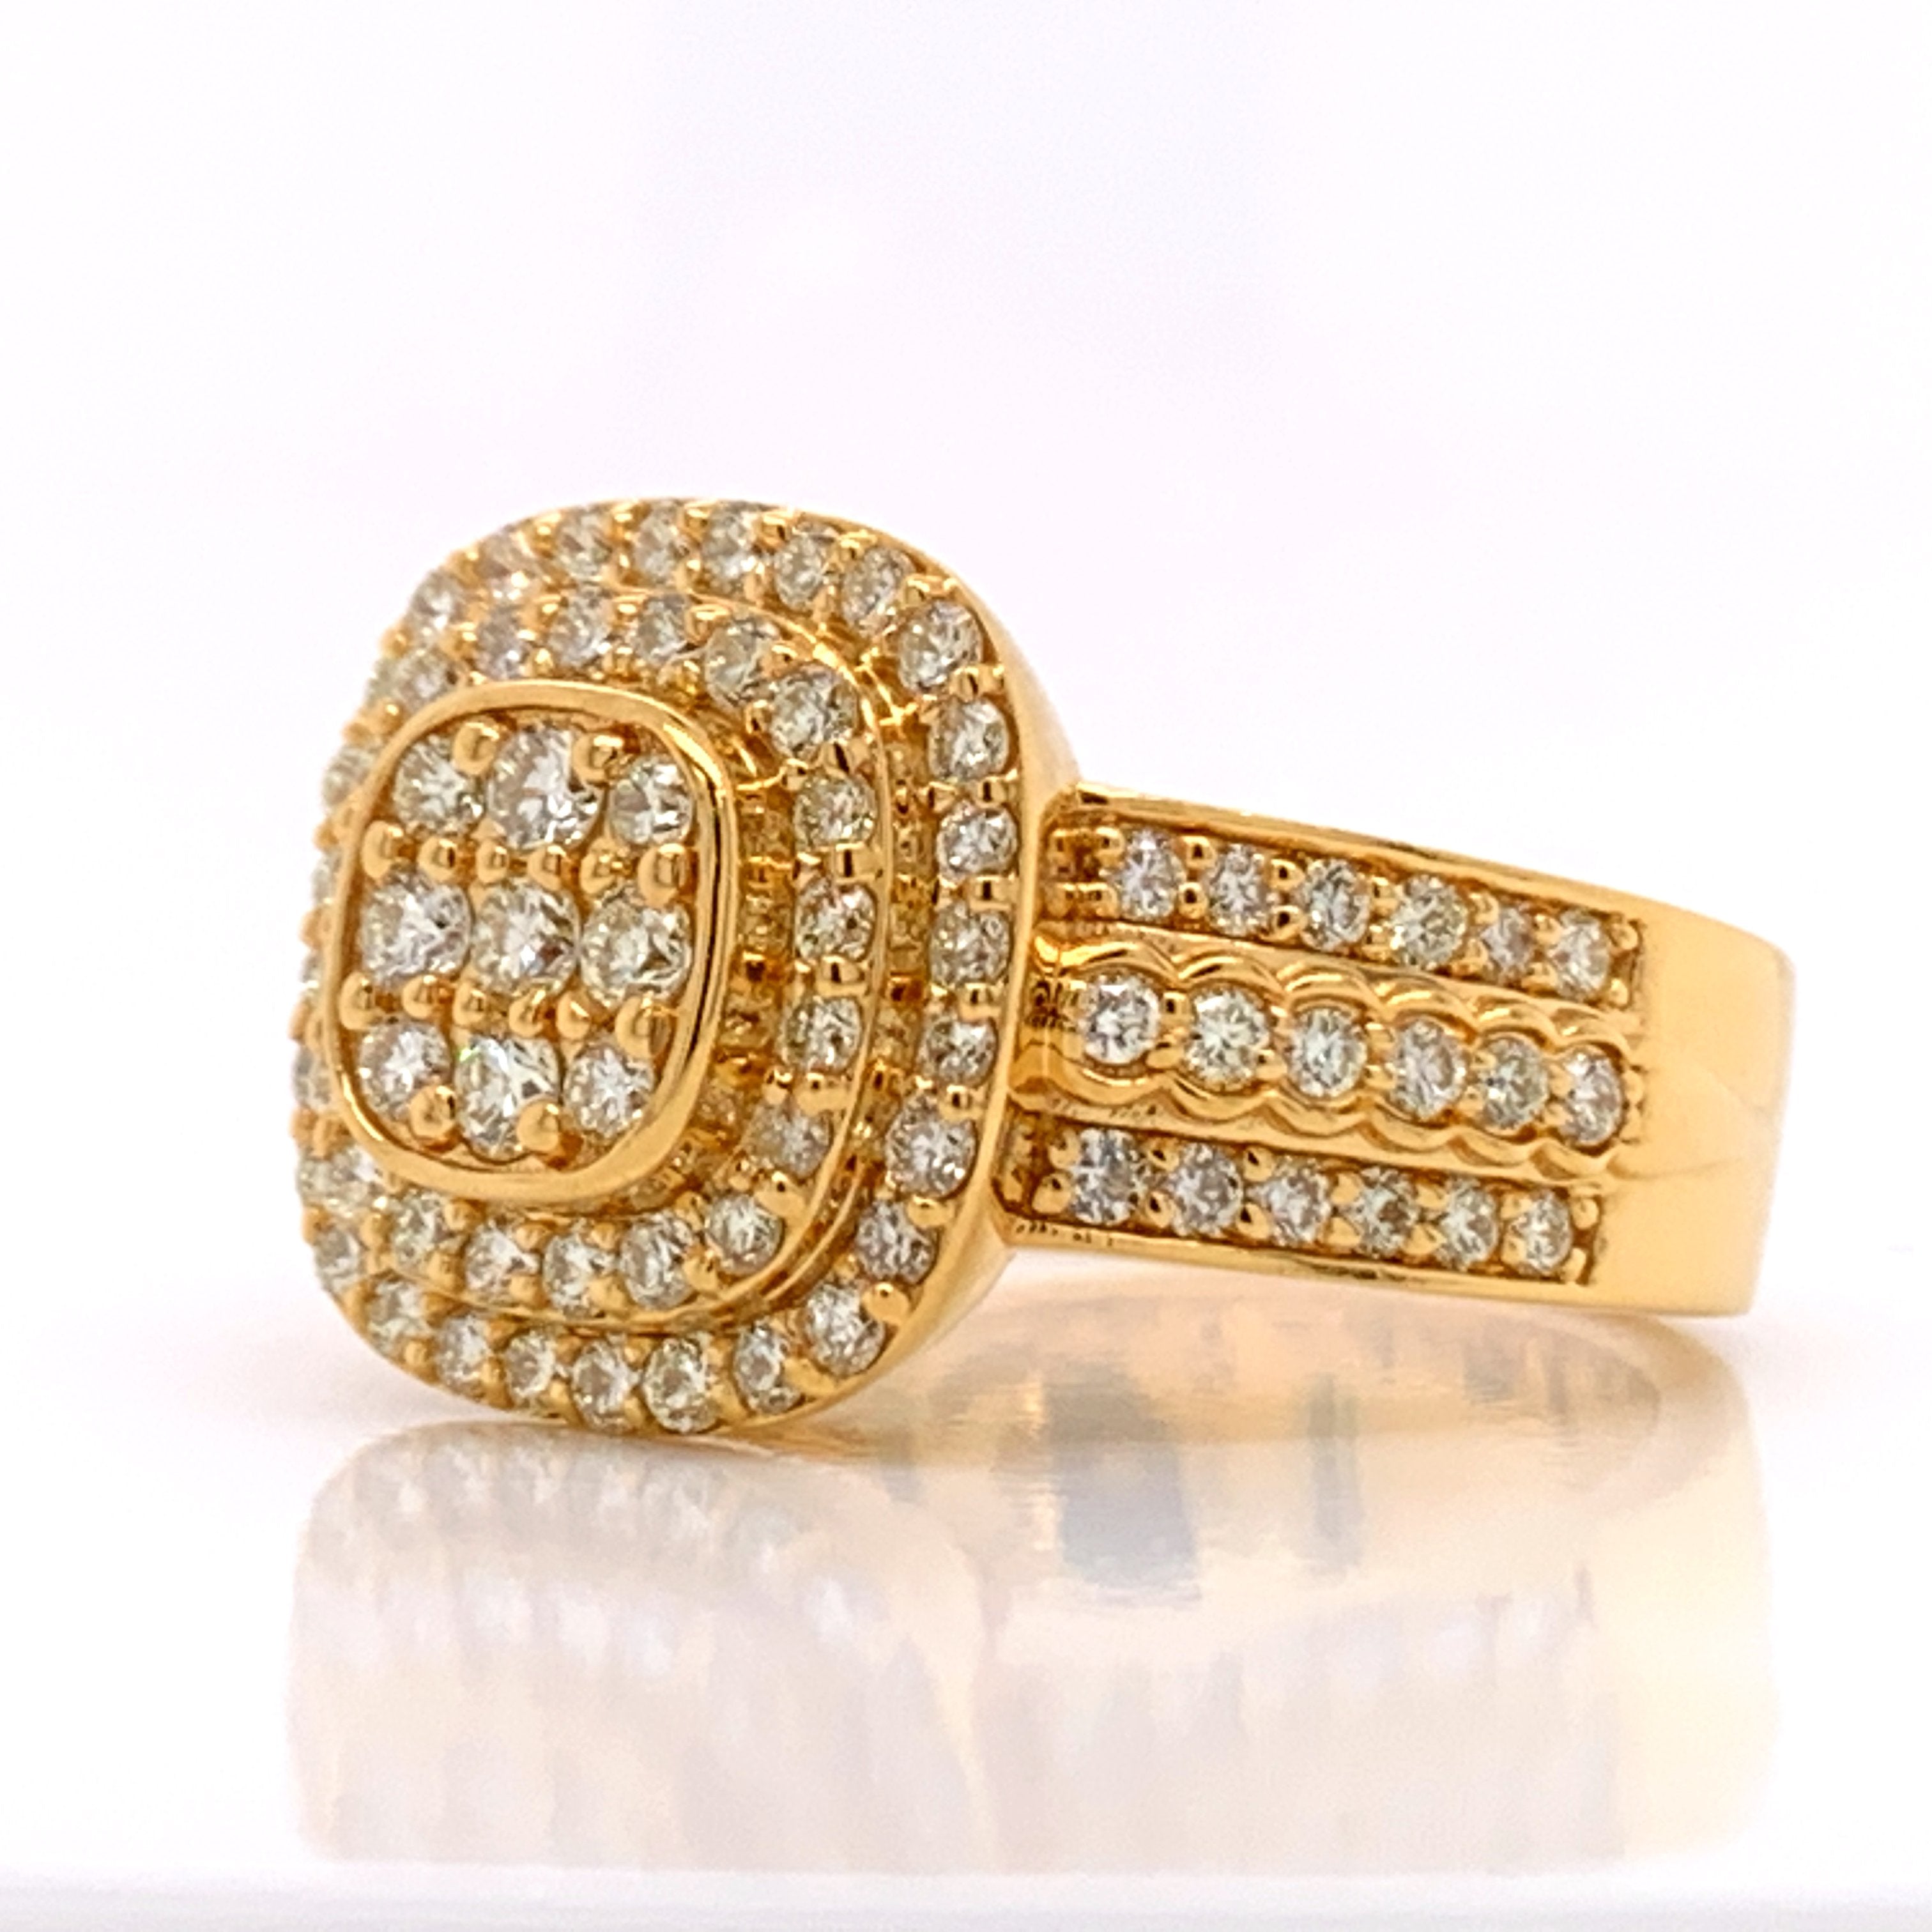 1.78CT Diamond 10K Gold Ring - White Carat Diamonds 